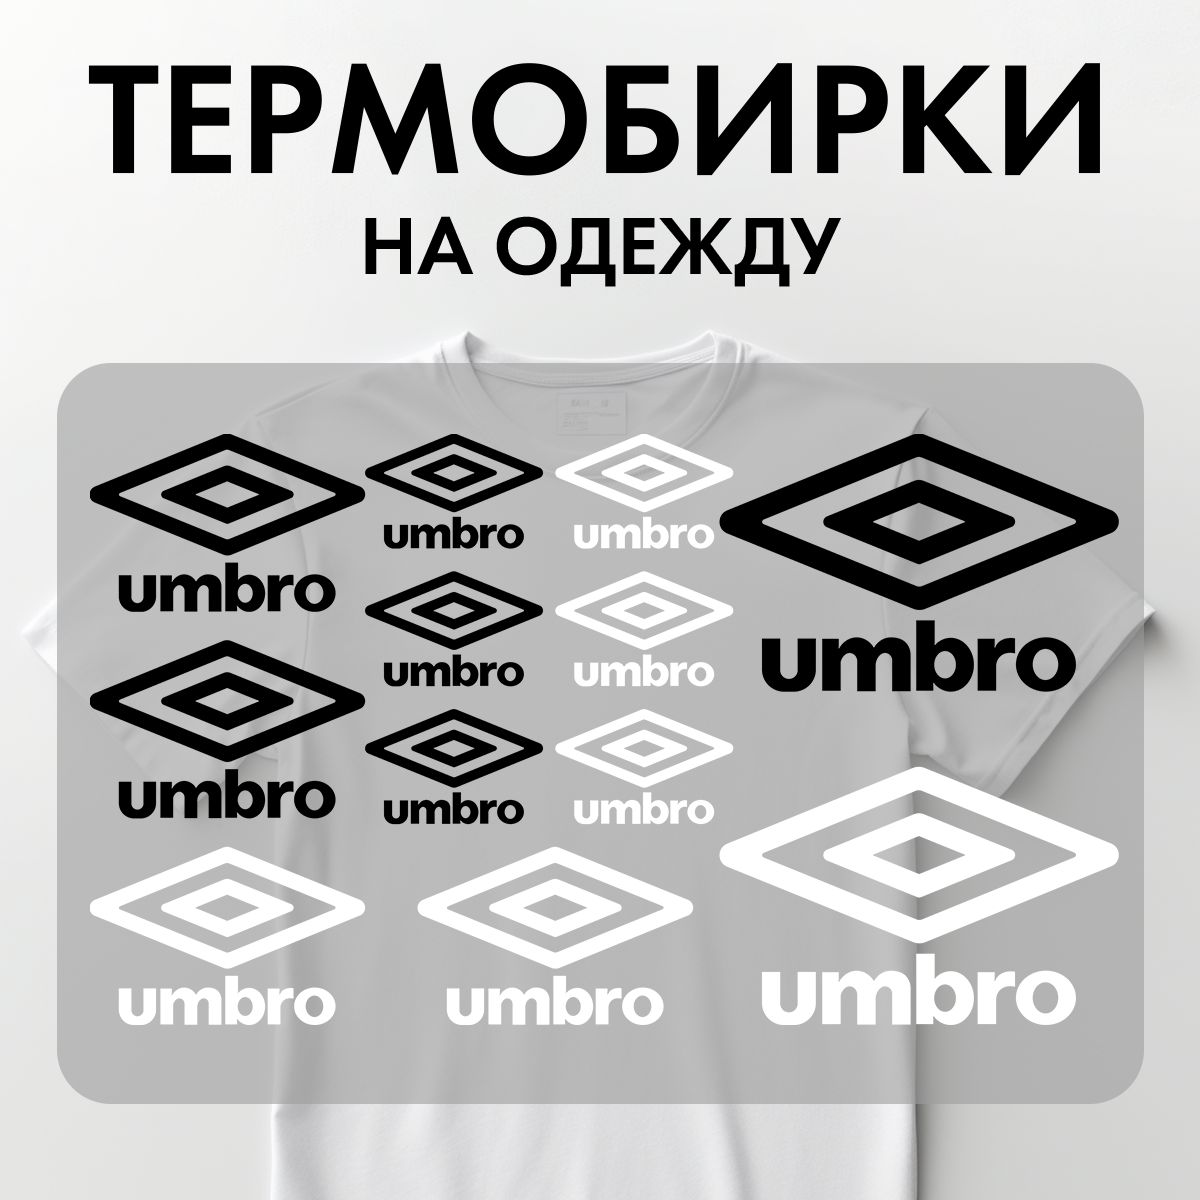 Термонаклейки Rekoy TB-LOGO Umb на одежду, логотип, надписи